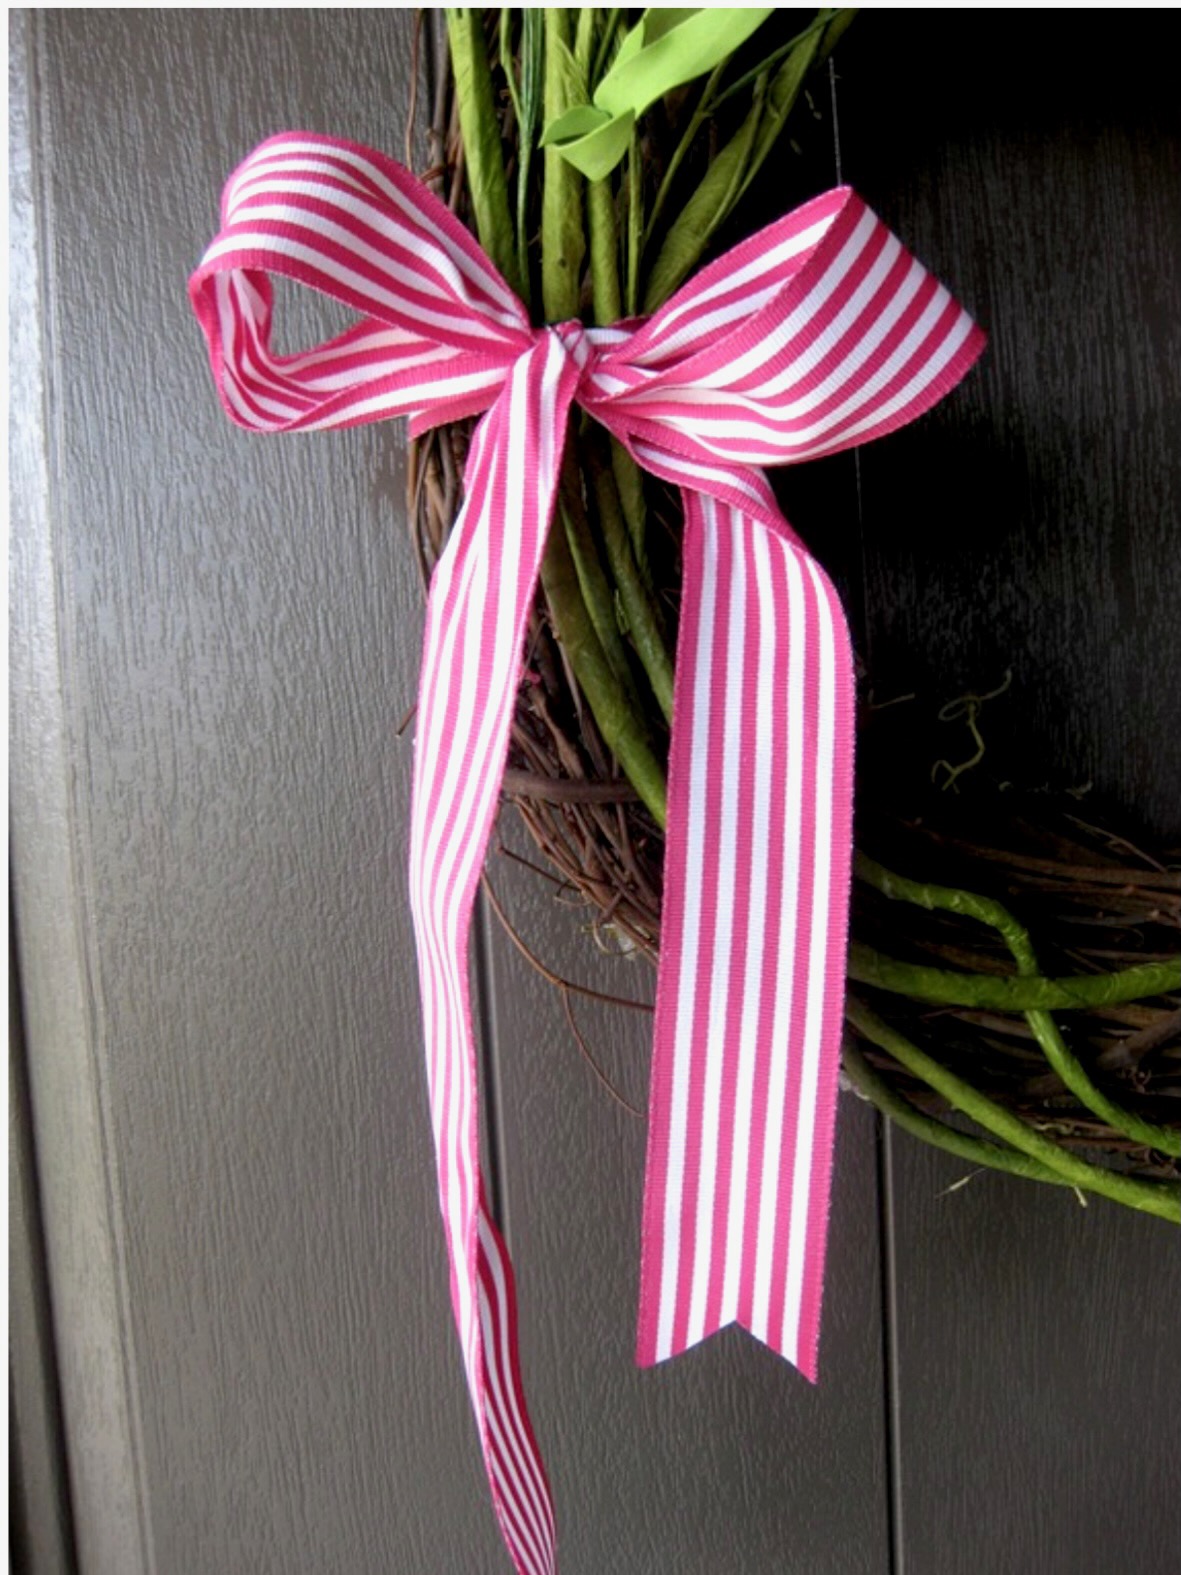 Hobby Lobby Mini Wreath + Velvet Ribbon DIY - amanda hamman